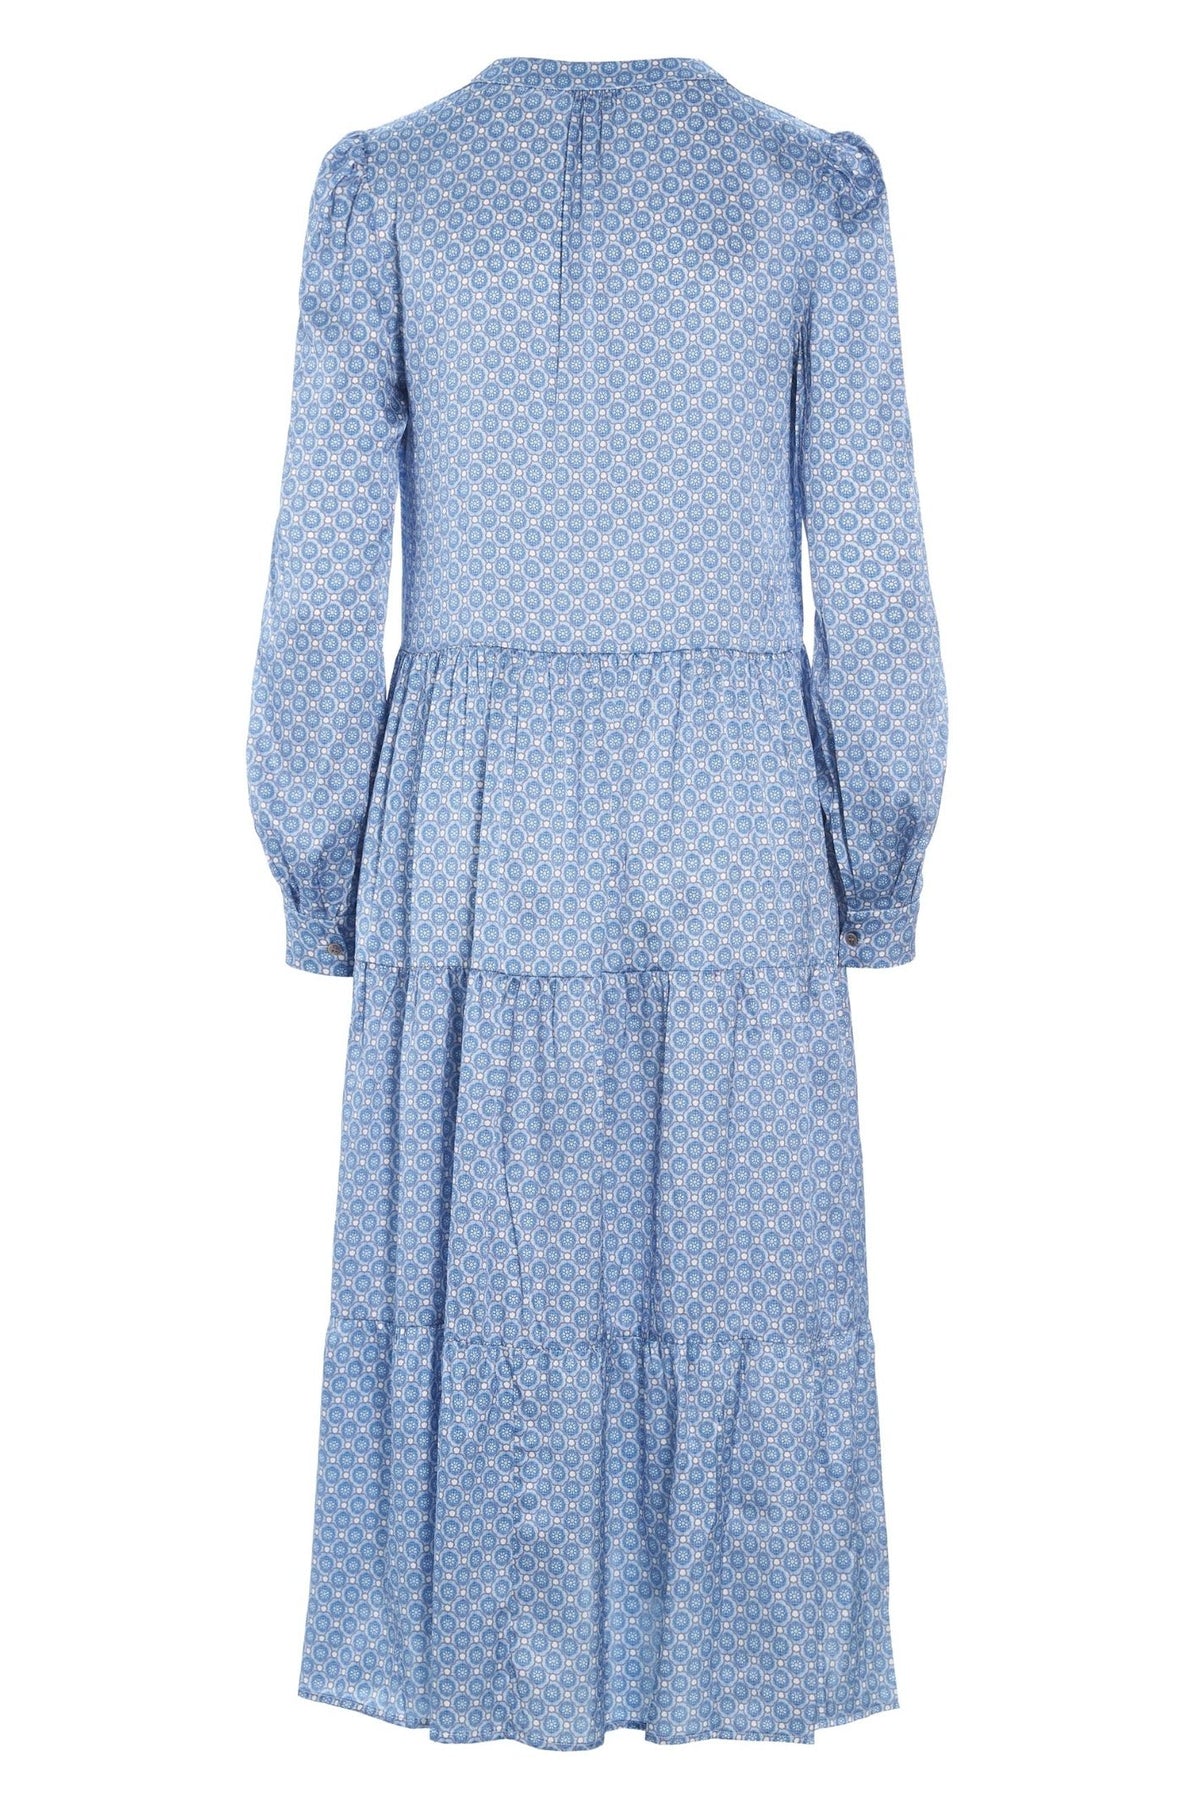 Dea Kudibal 340122 Cathrin Dress Blue | Lonah